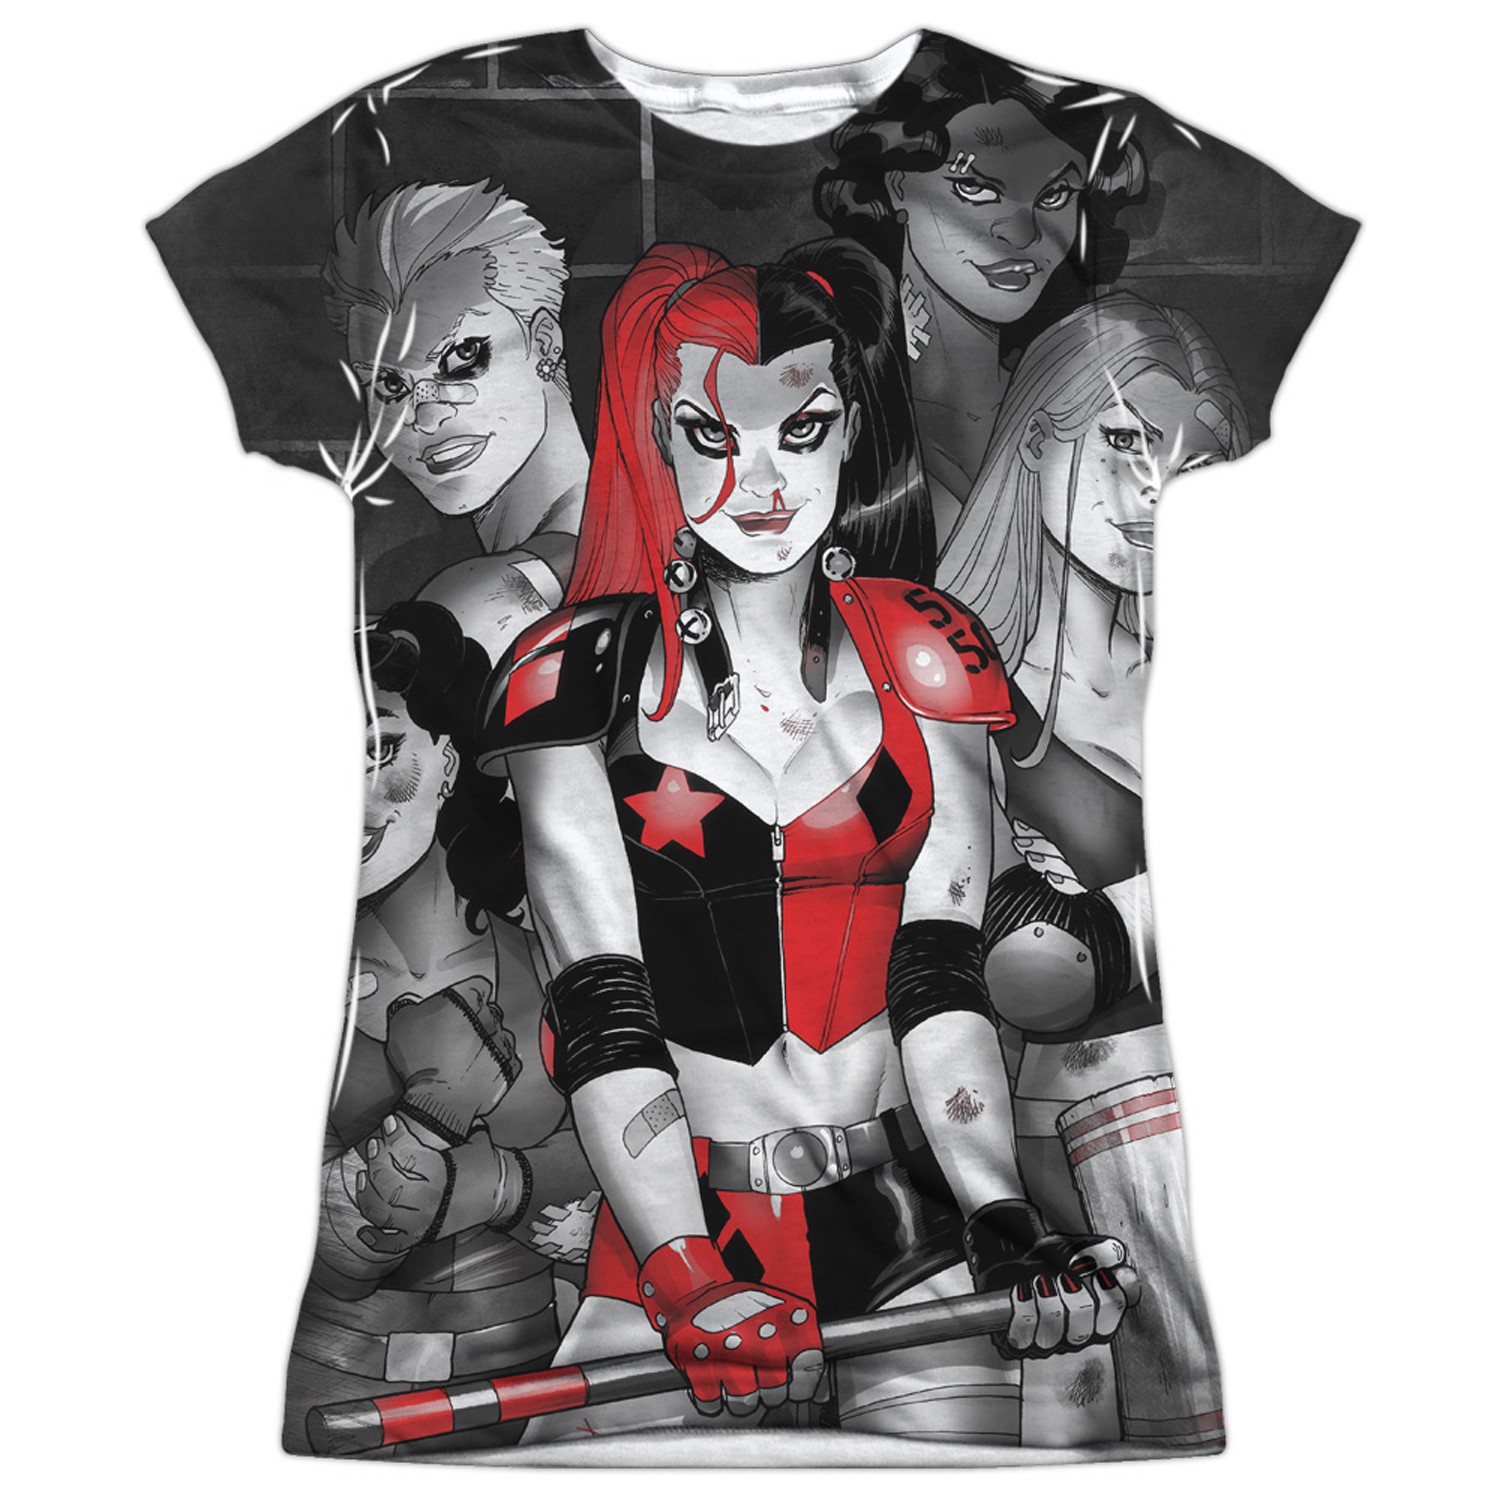 Harley Quinn Bad Girls Women's Sublimated Tshirt